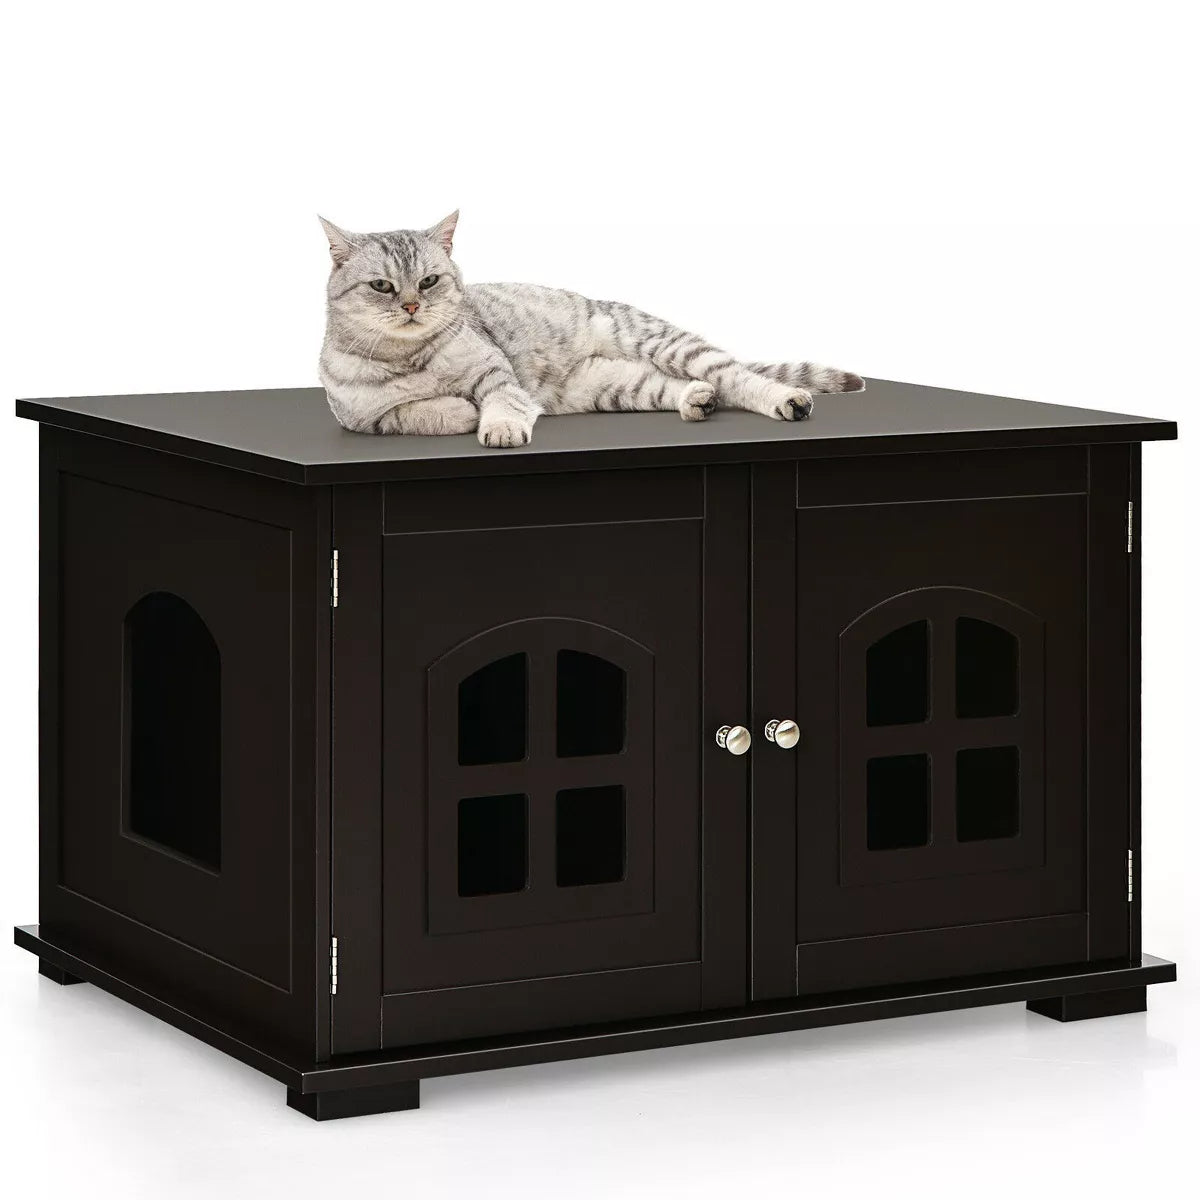 Large Wooden Cat Litter Box Enclosure Hidden Cat Washroom w/ Divider